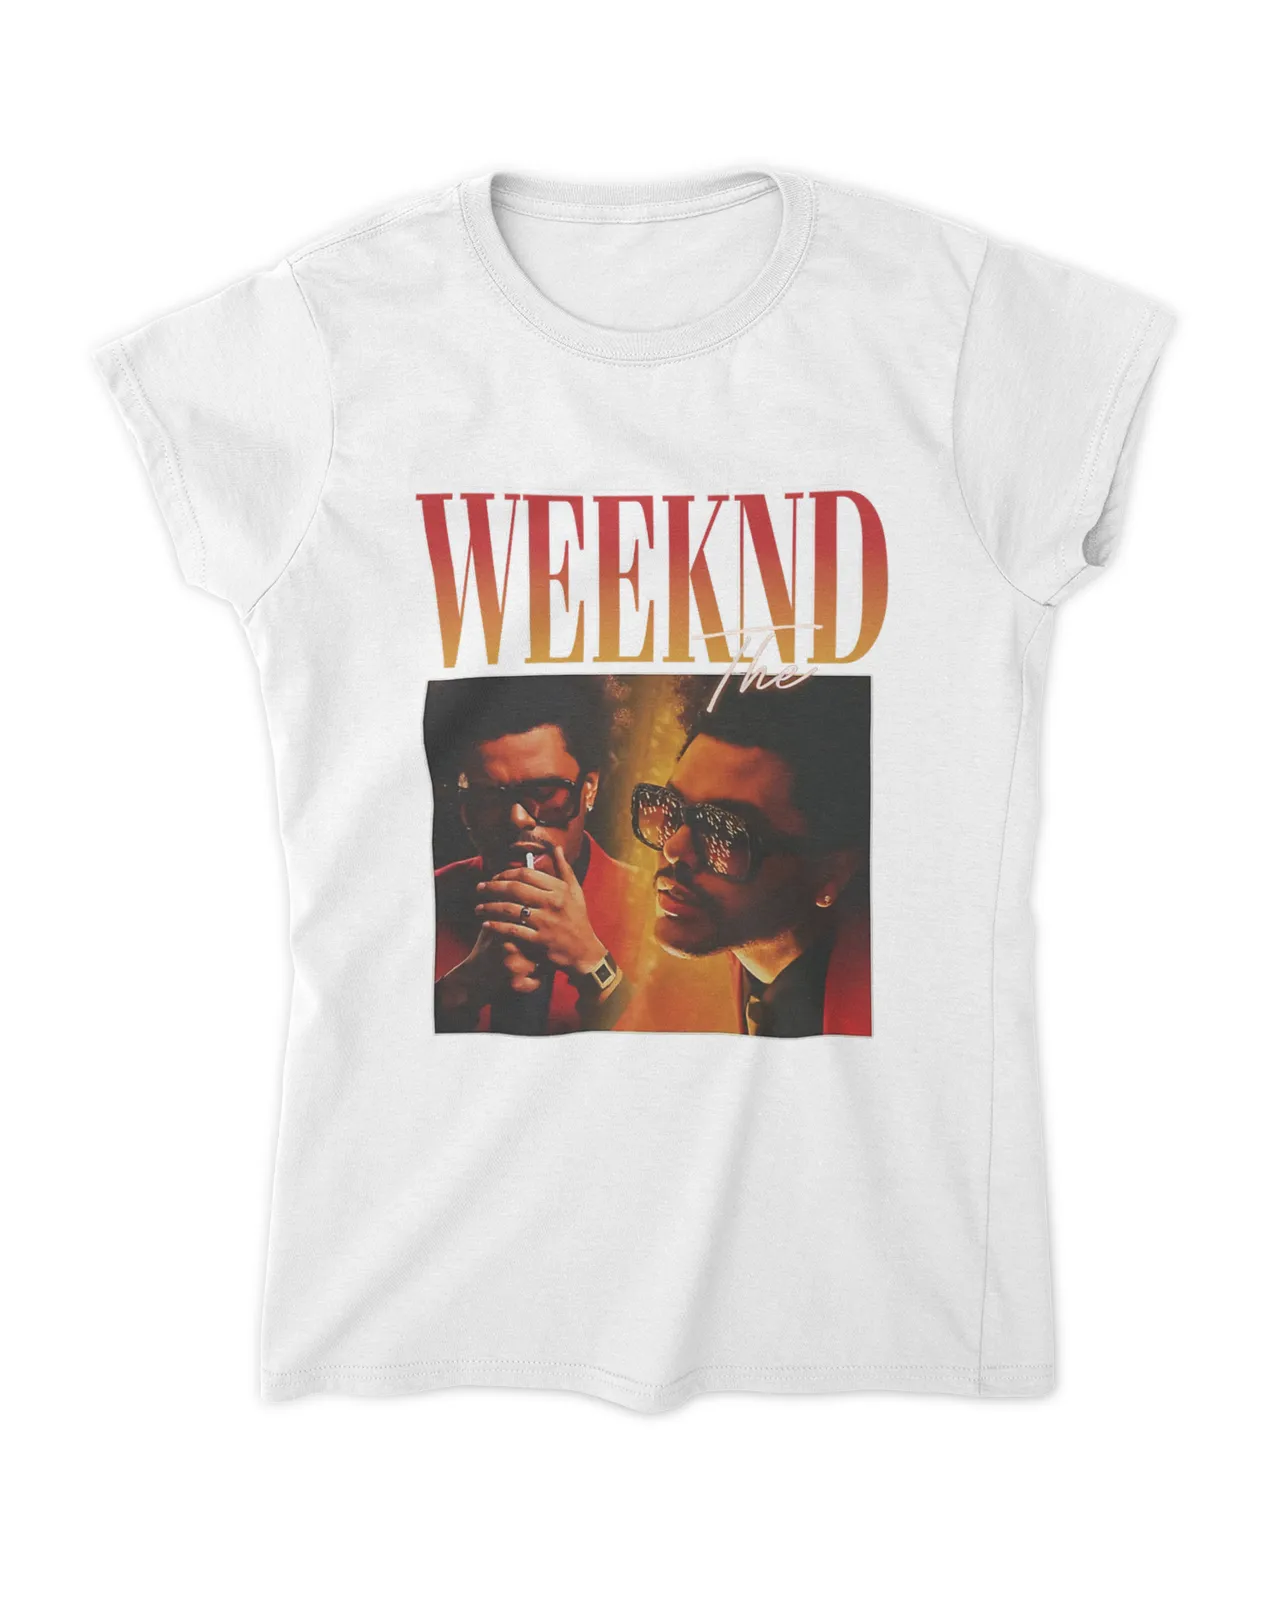 The Weeknd T Shirt